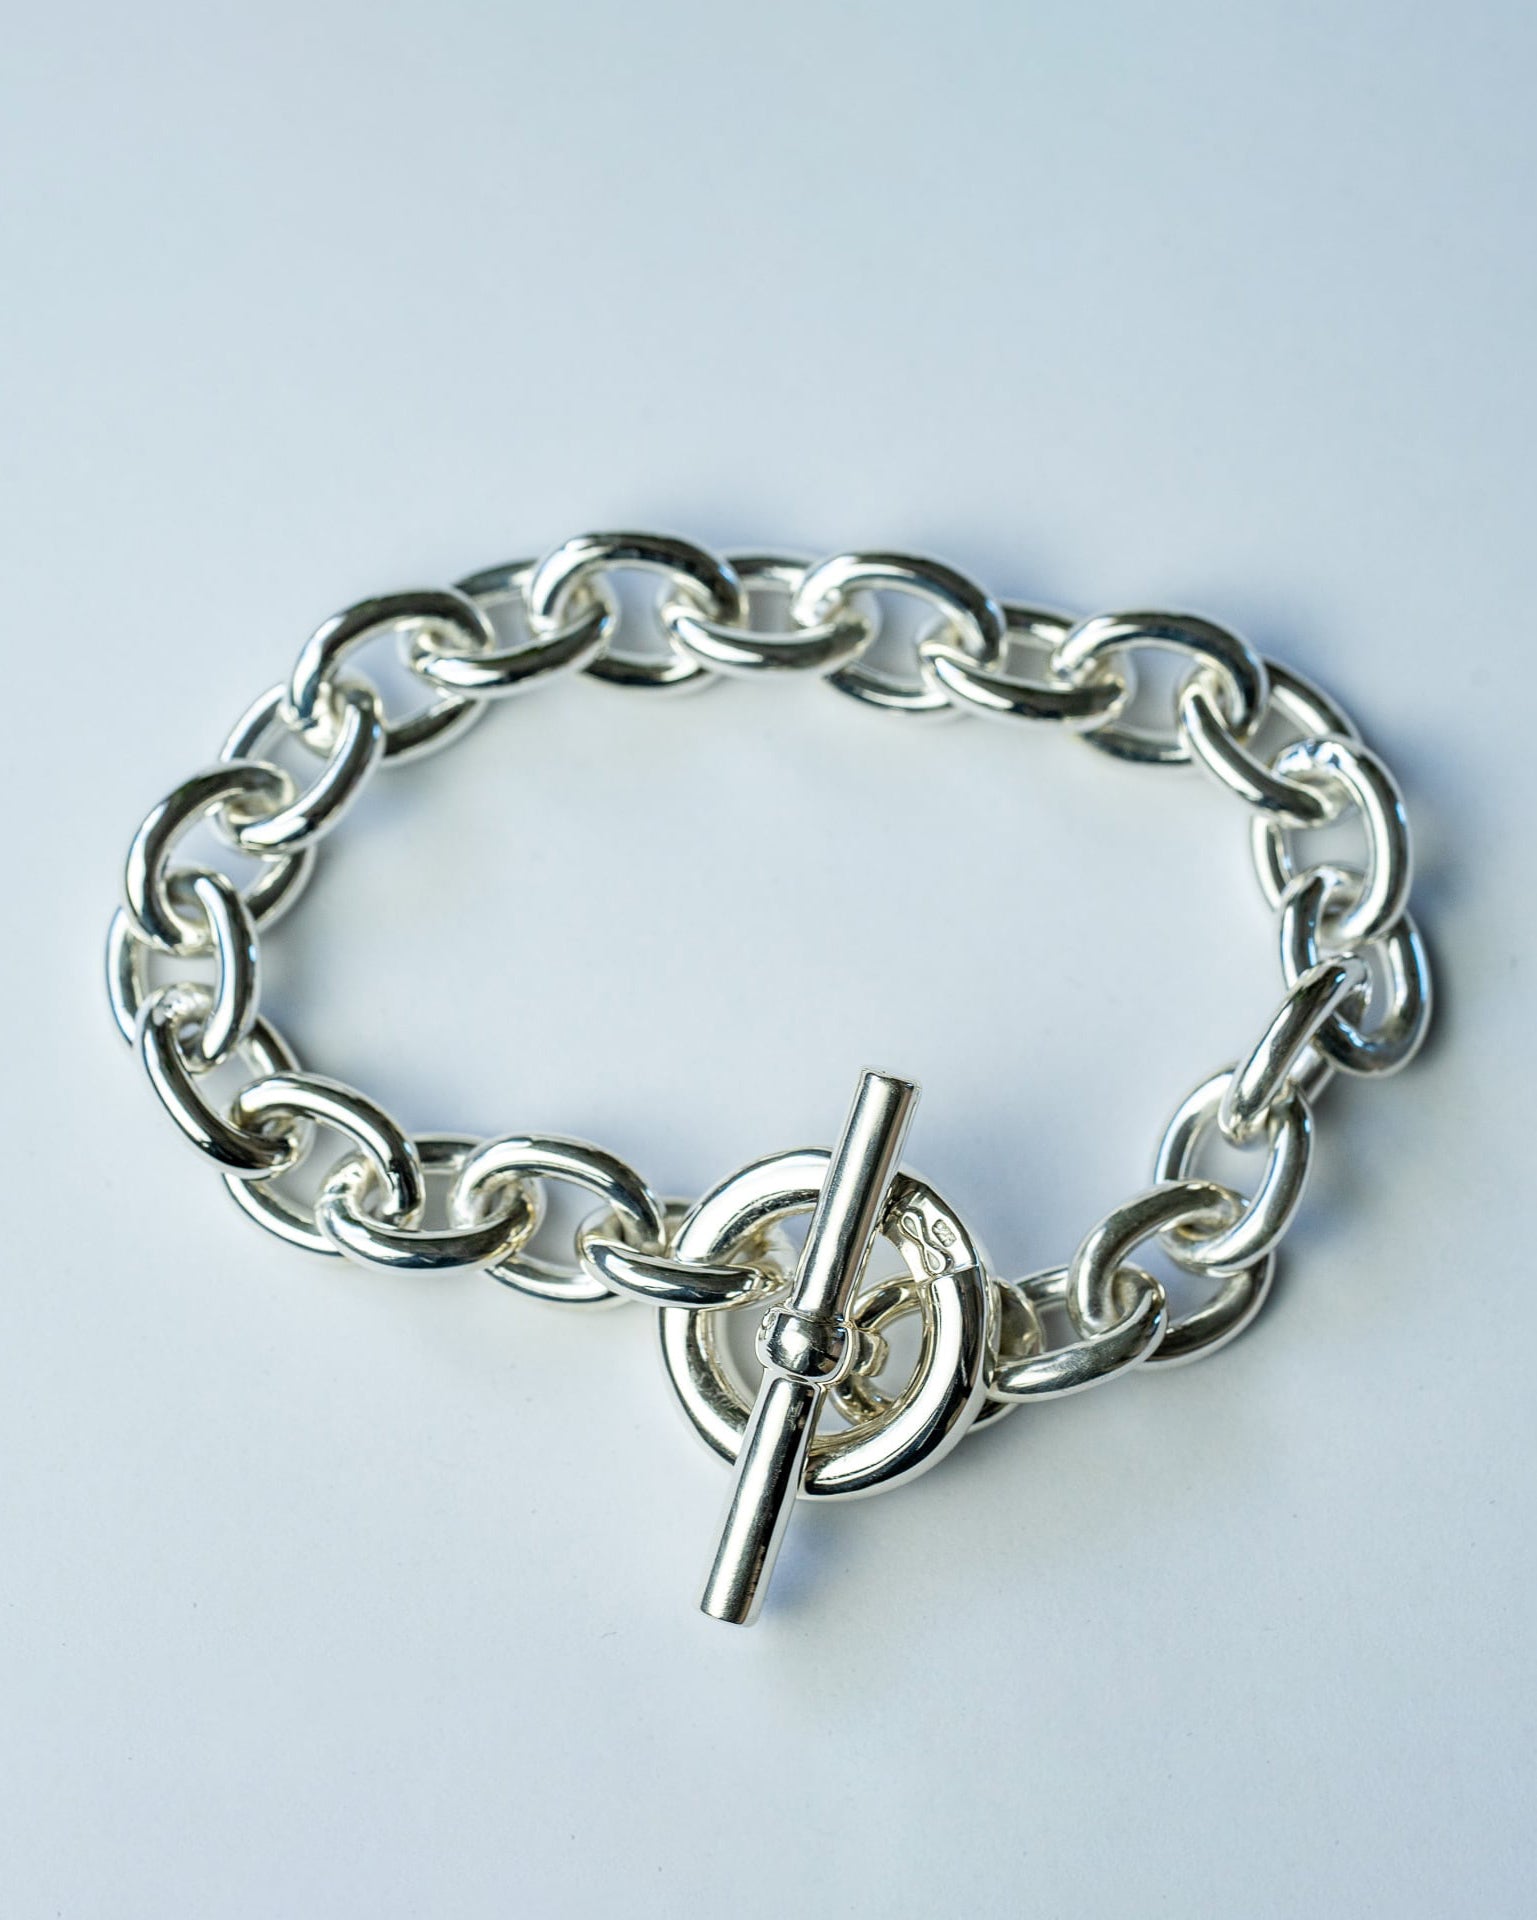  St. Croix Style Hook Bracelet 4 mm wide, Sterling